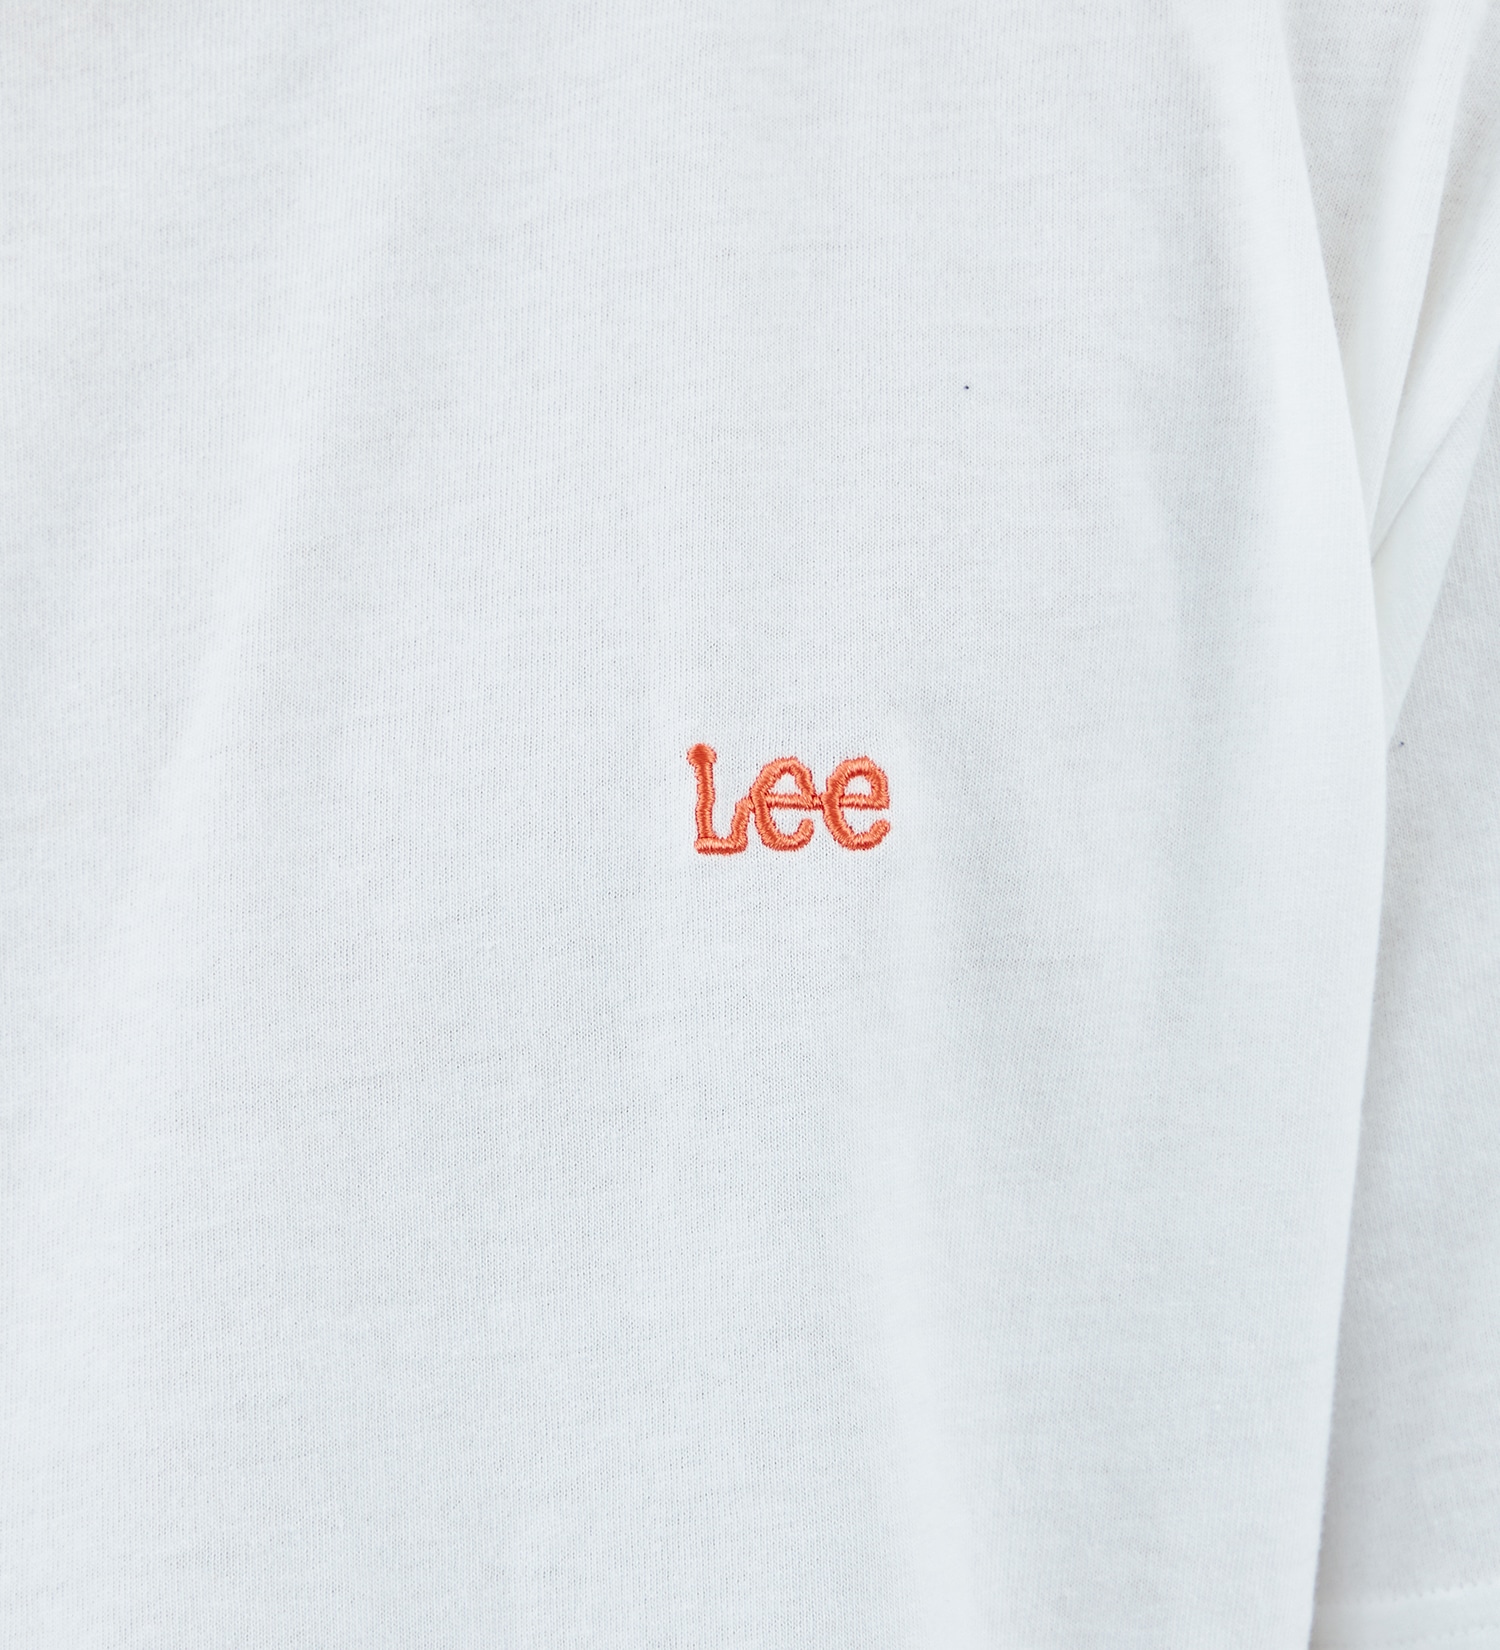 Lee(リー)の【SUMMER SALE】LeeネオンカラーロゴバックプリントTシャツ|トップス/Tシャツ/カットソー/メンズ|ホワイト